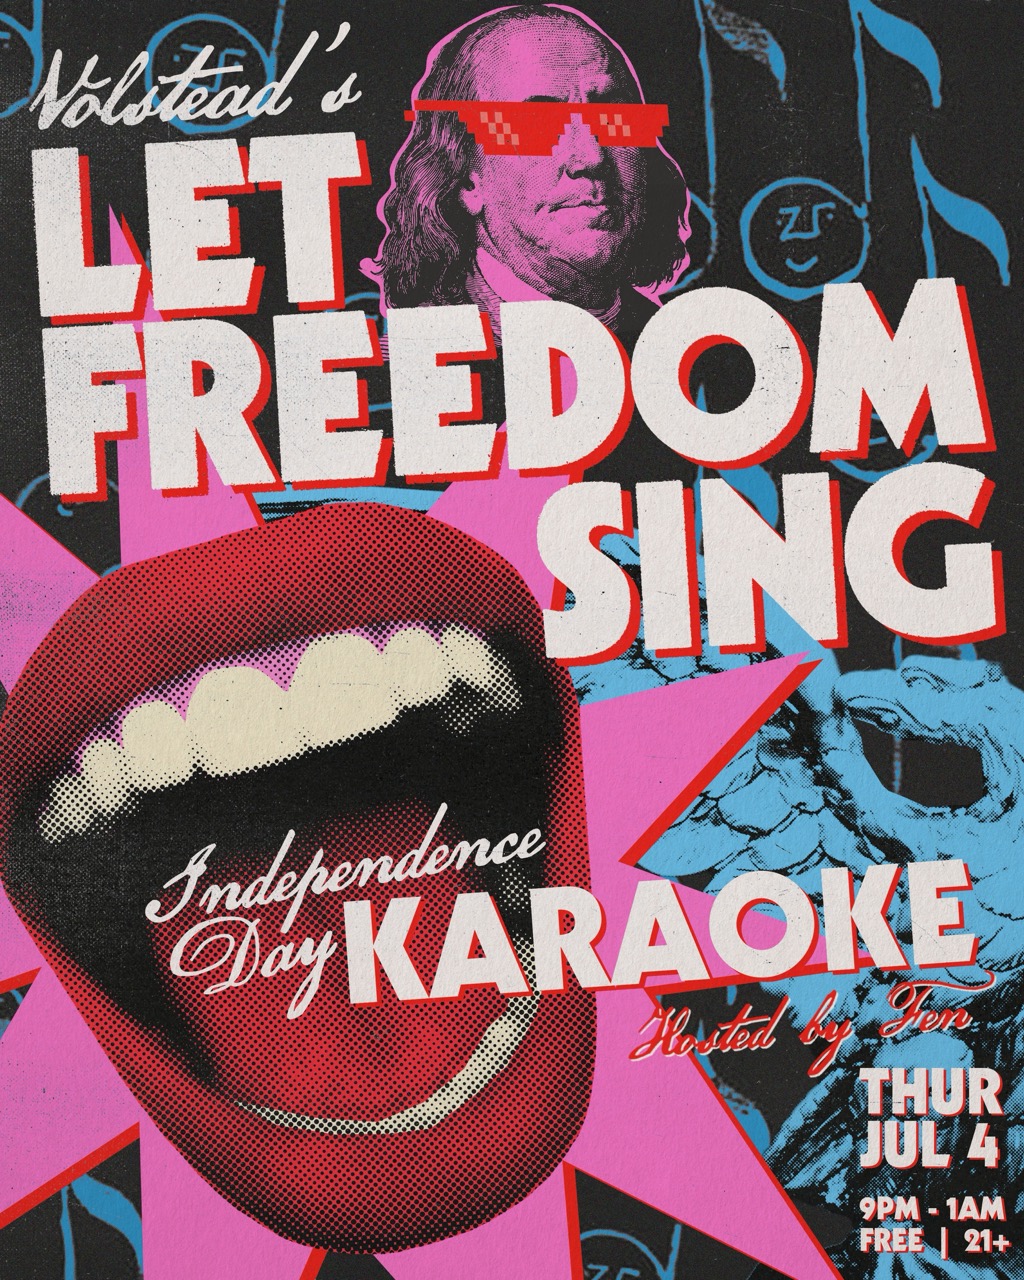 Let Freedom Sing - Independence Day Karaoke @ Volstead Lounge